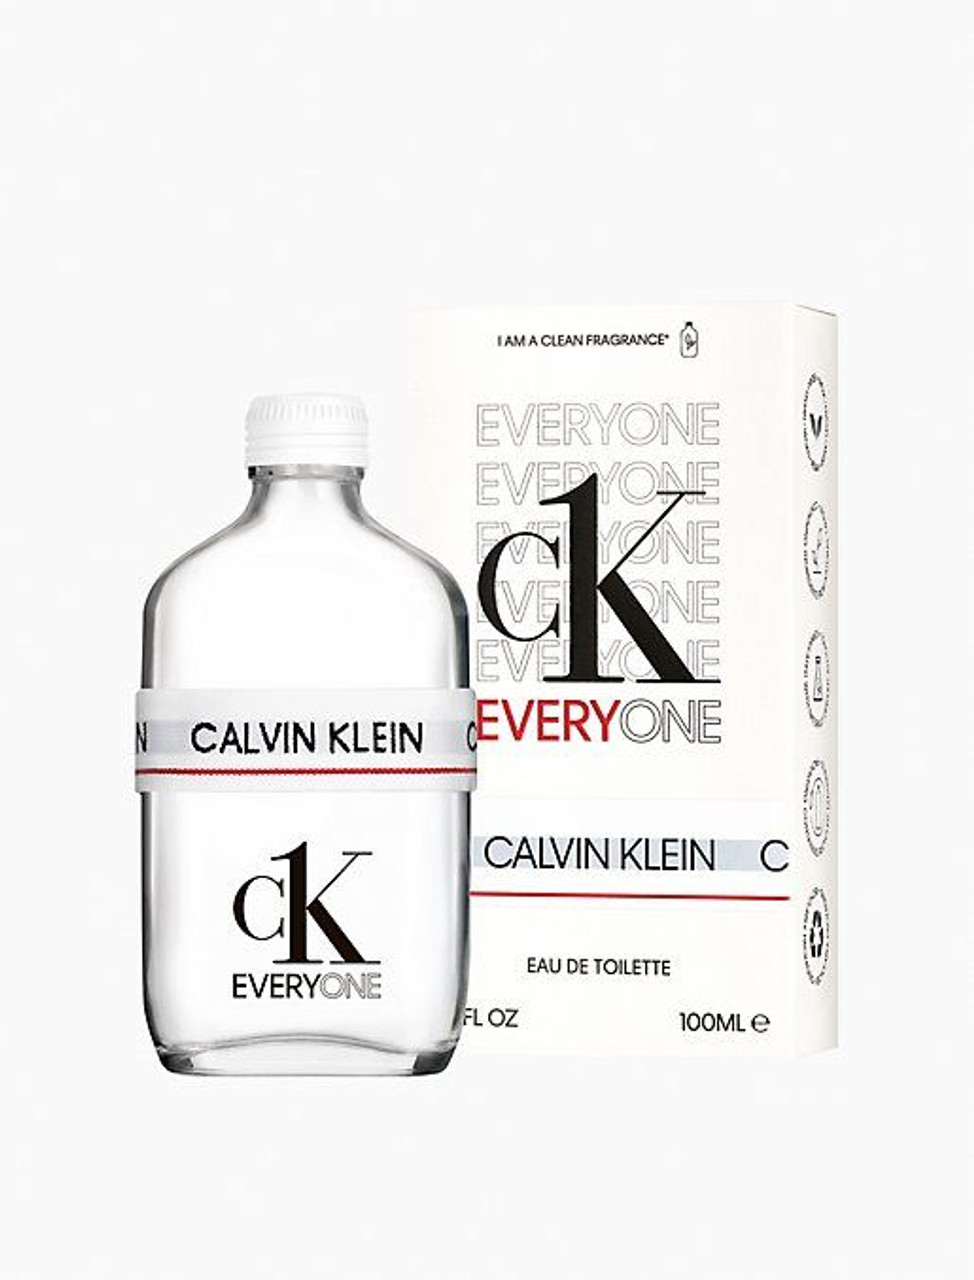 Calvin Klein CK One Eau De Toilette Spray, Unisex Perfume, 6.7 oz 